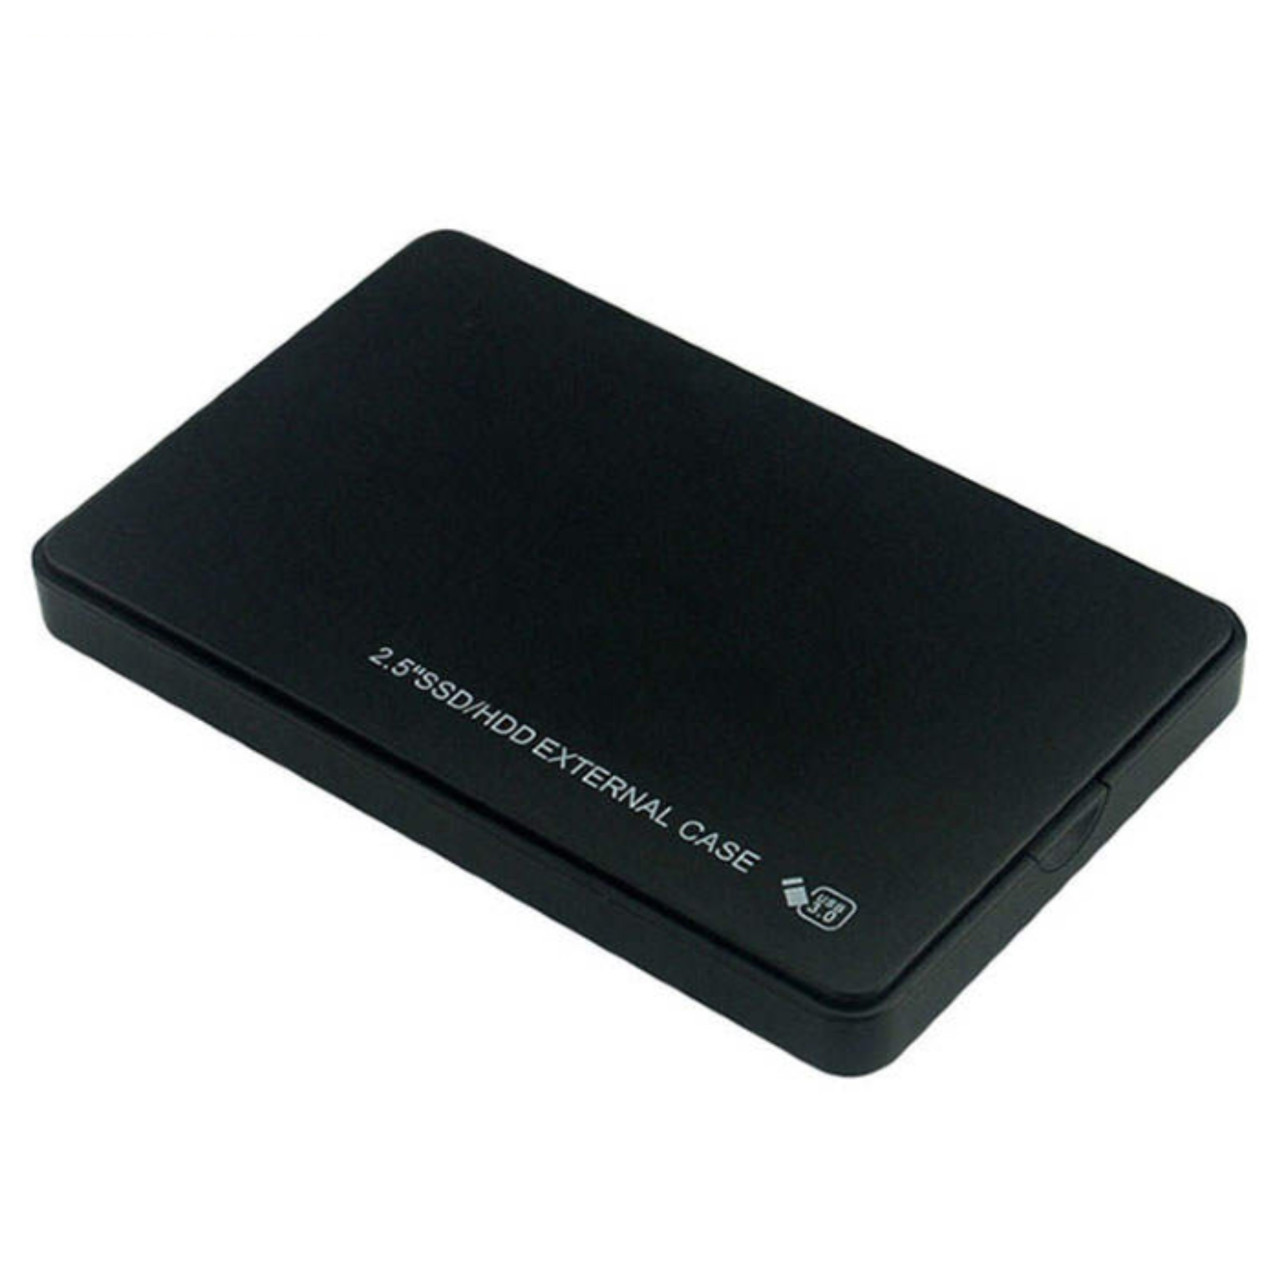 LUPO USB 3.0 SATA 2.5 inch Hard Disk Drive HDD External Caddy Case  Enclosure - BLACK